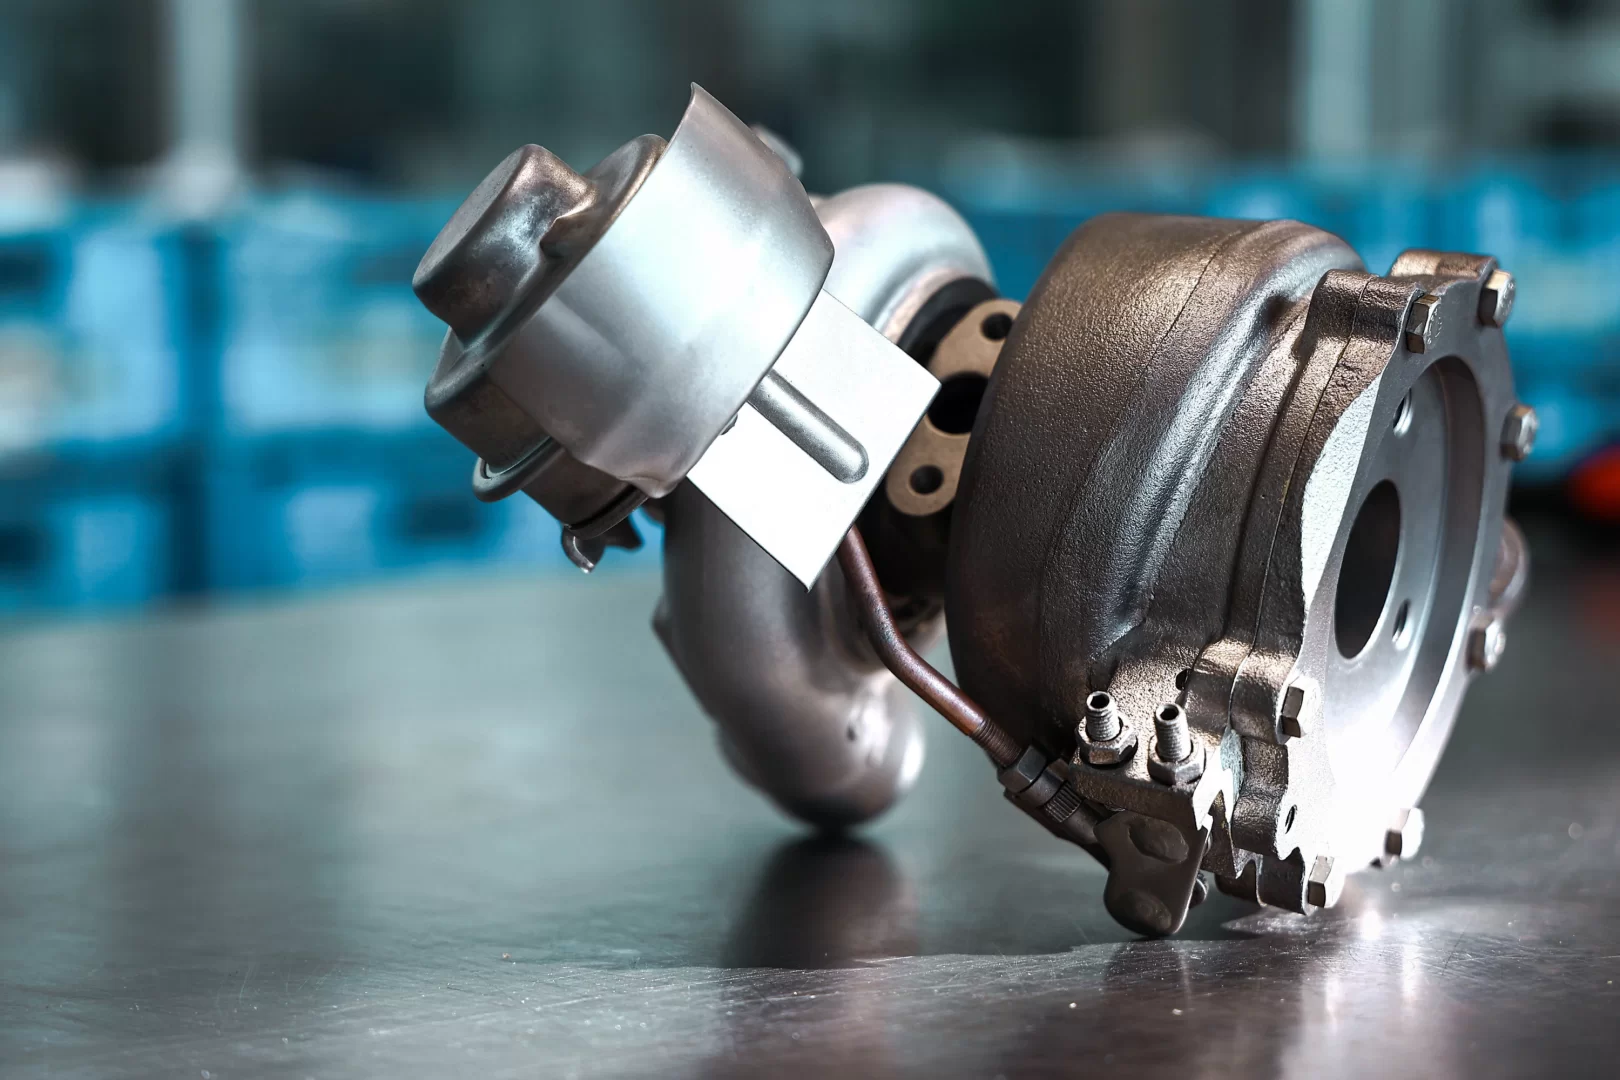 Regeneracja turbosprężarki w Bosch Diesel Service